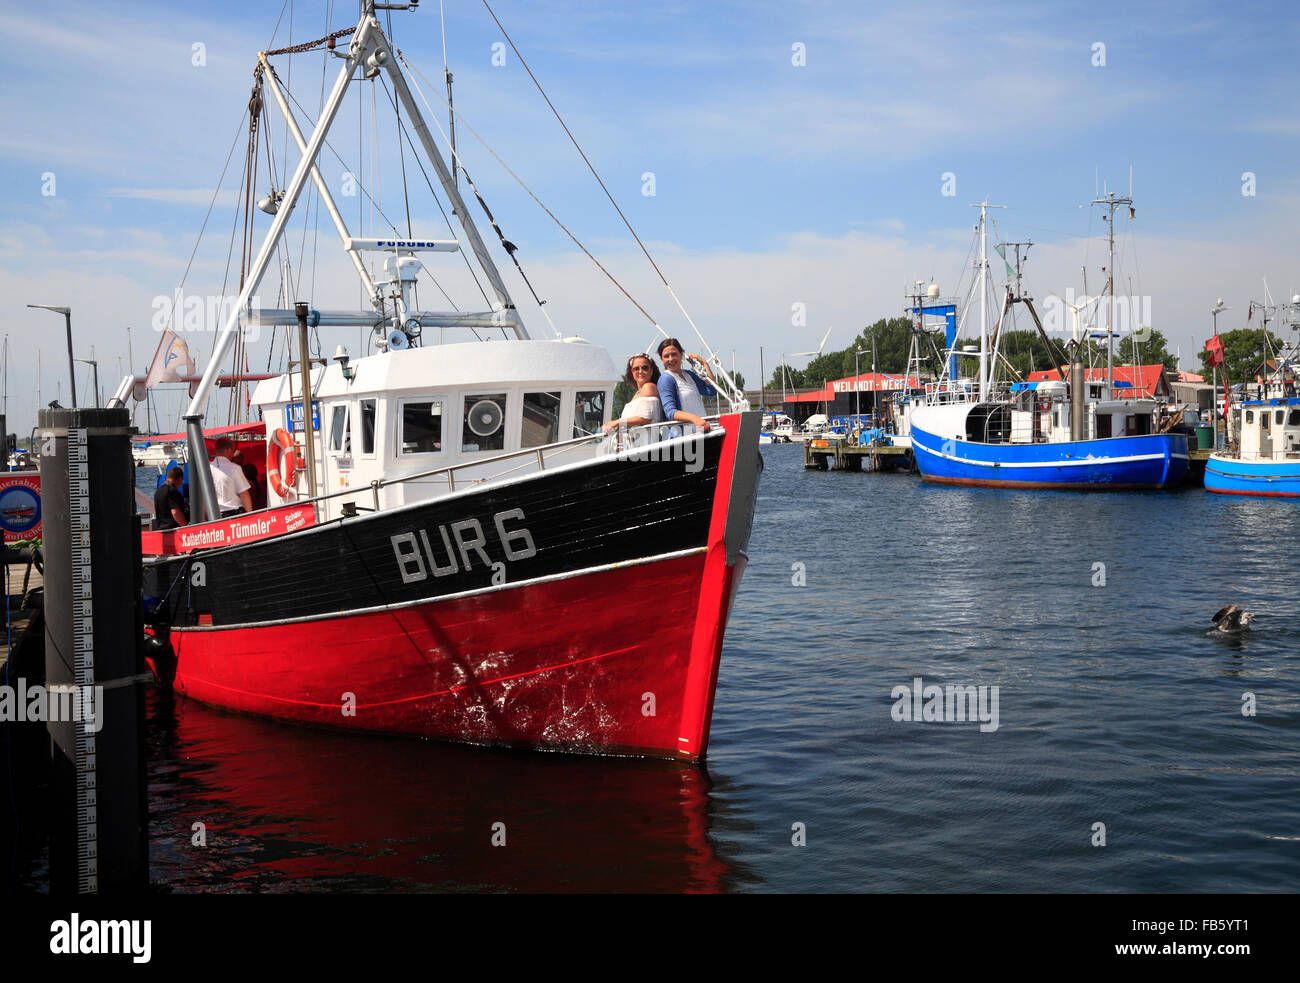 Tourist cruise ship, Burgstaaken harbour Fehmarn island, Baltic sea coast, Schleswig-Holstein, Germany Stock Photo